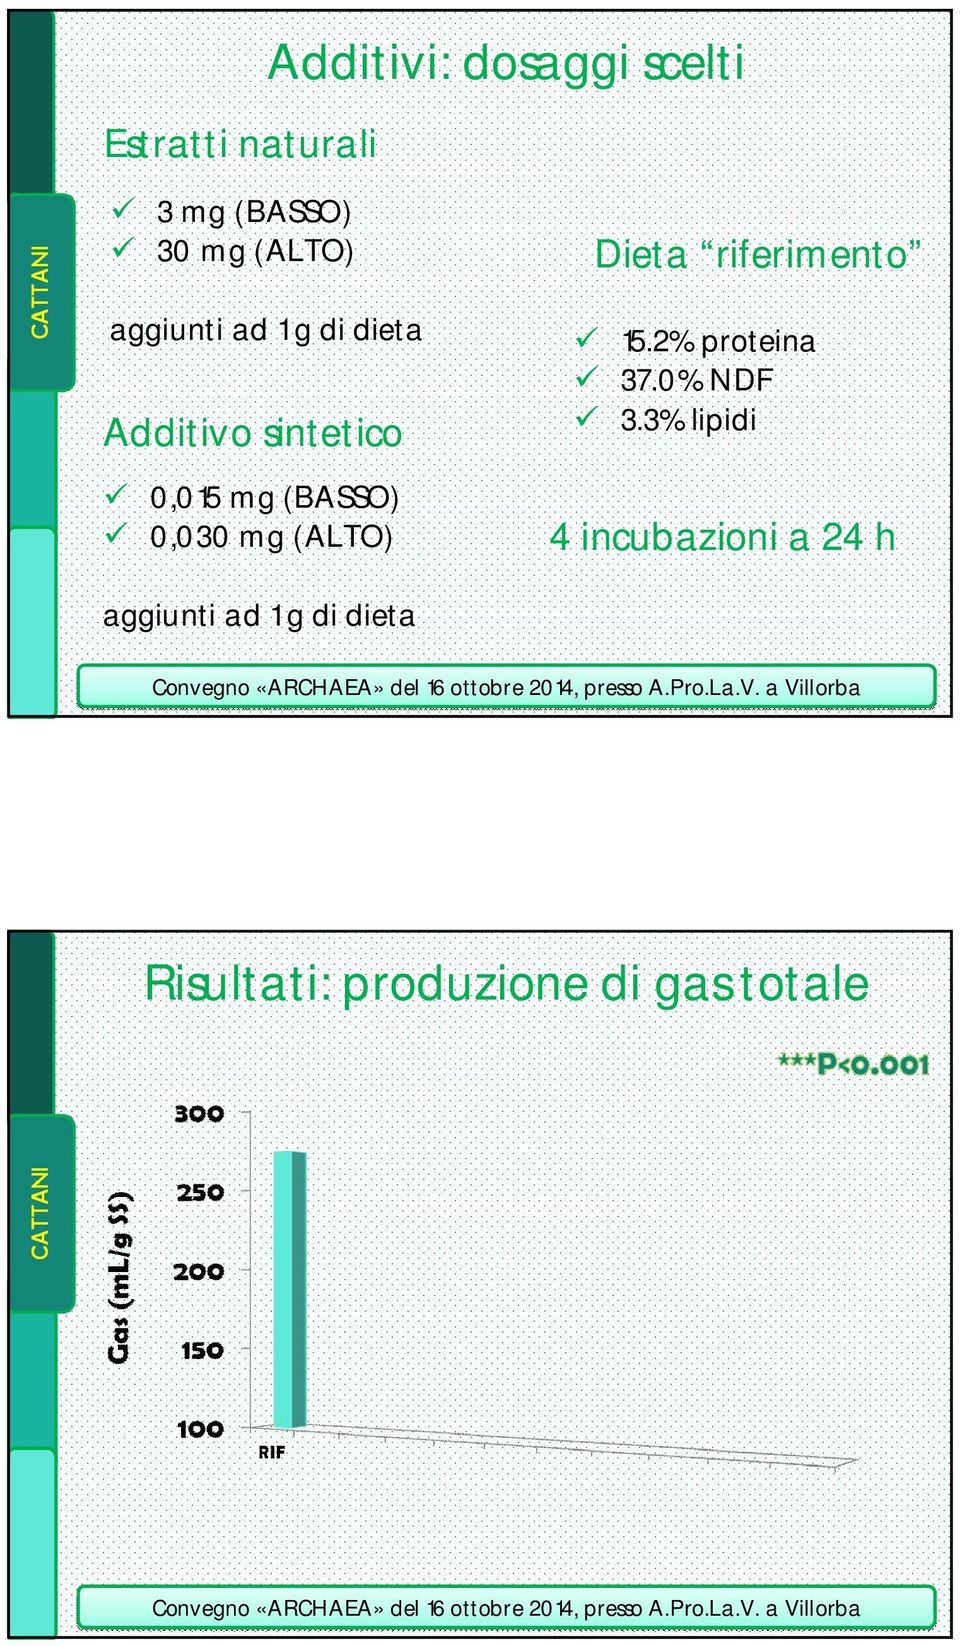 (BASSO) 0,030 mg (ALTO) 15.2% proteina 37.0% NDF 3.